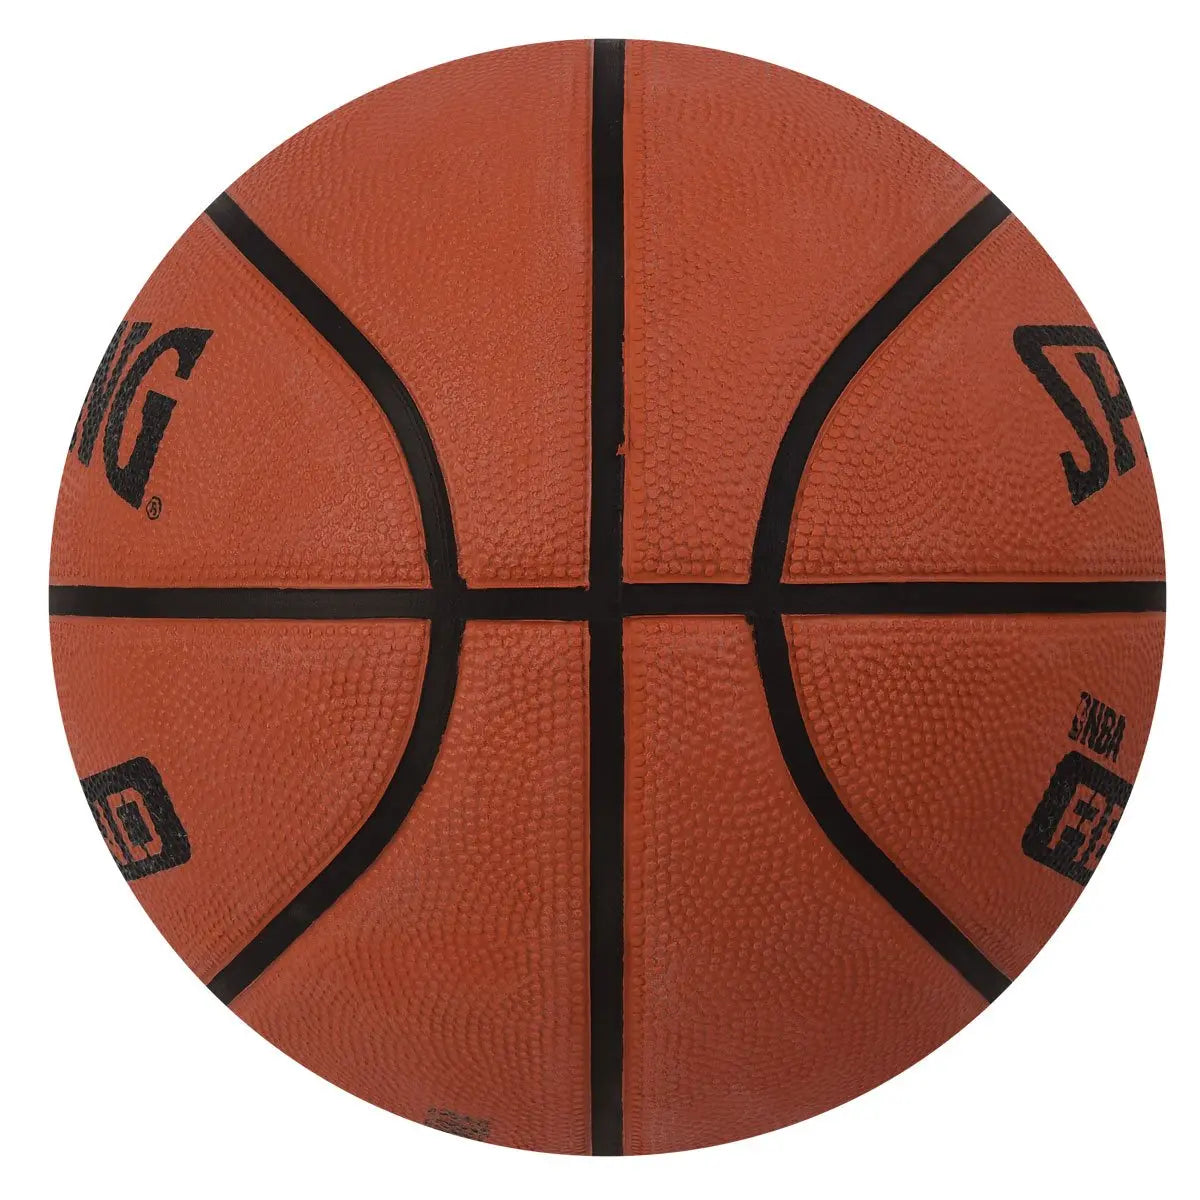 Spalding Basketball - Size 7 Playmonks.com